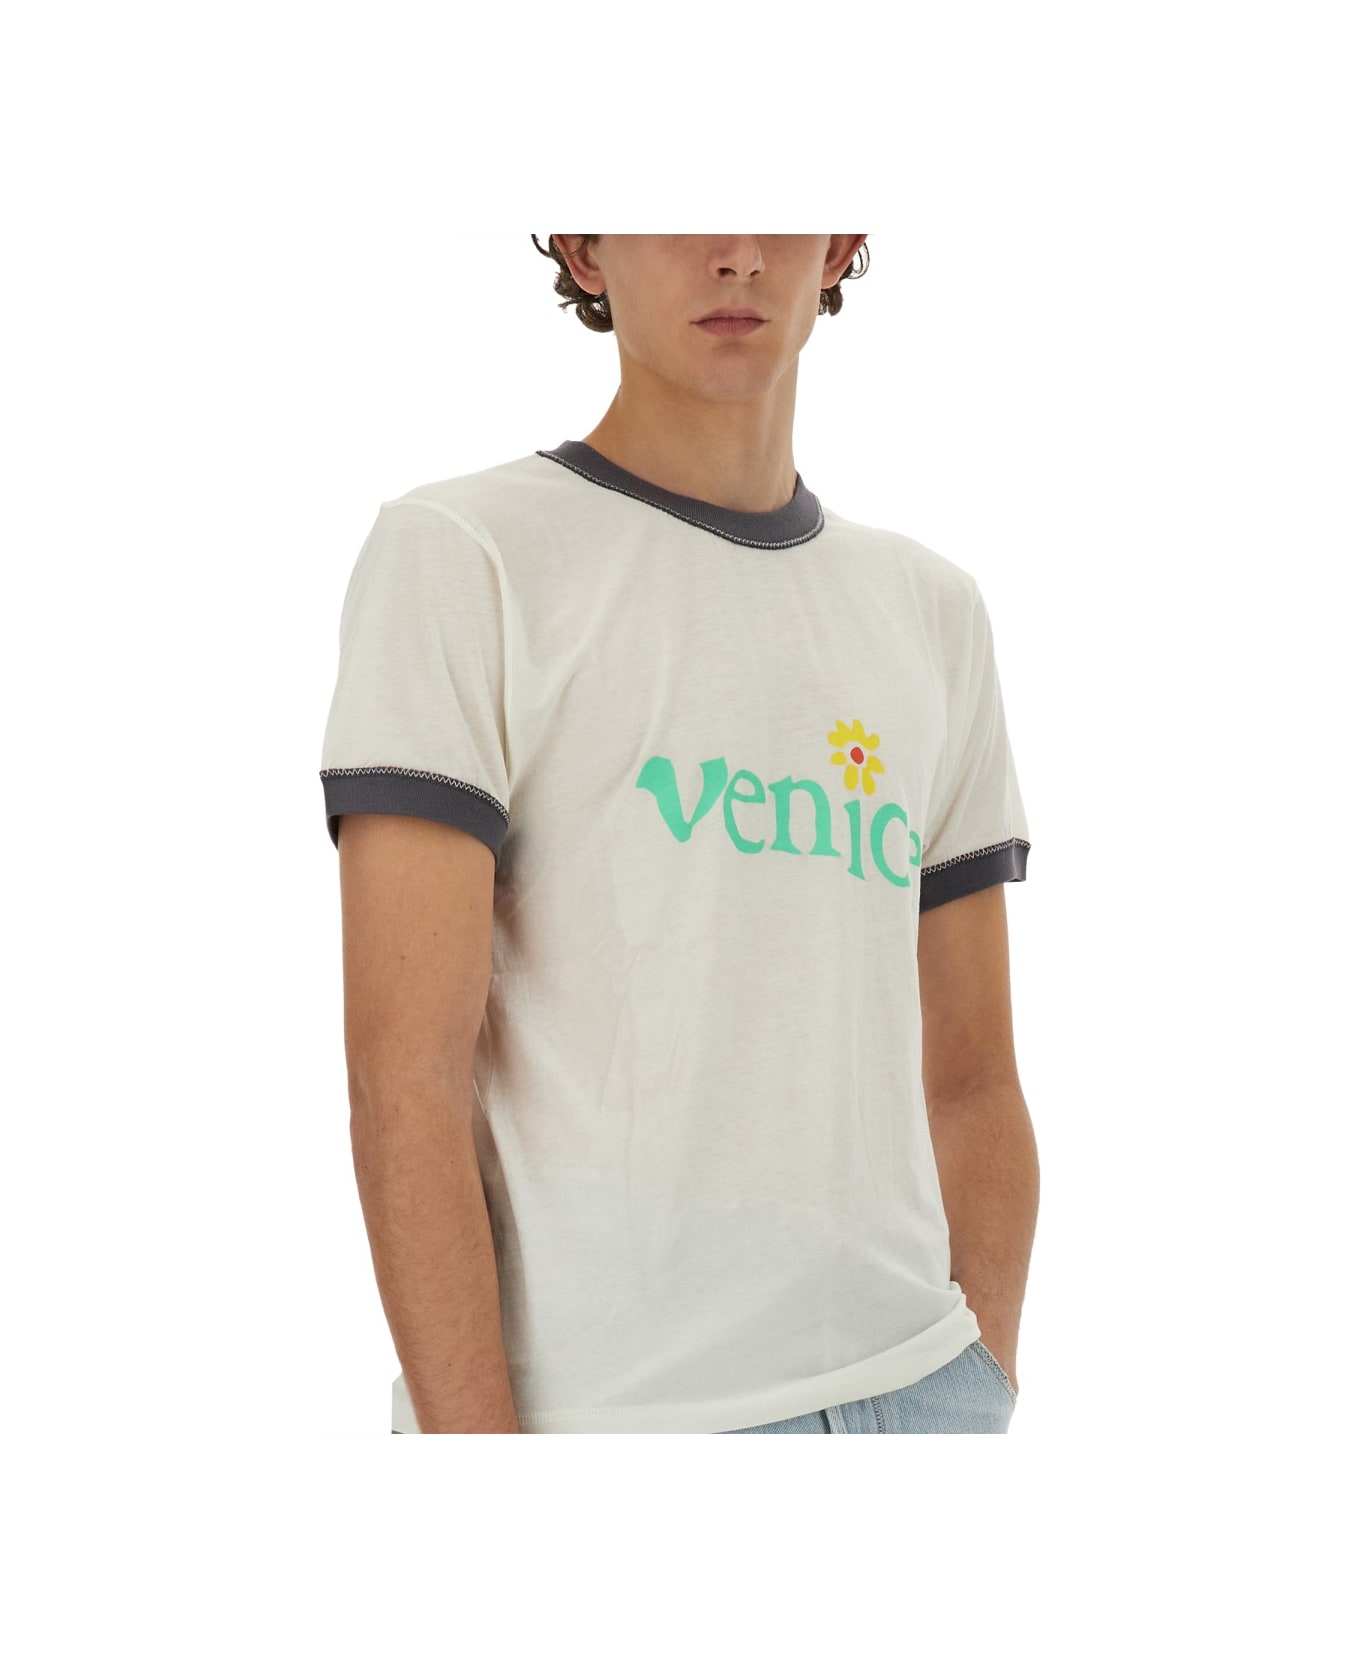 ERL T-shirt "venice" - WHITE